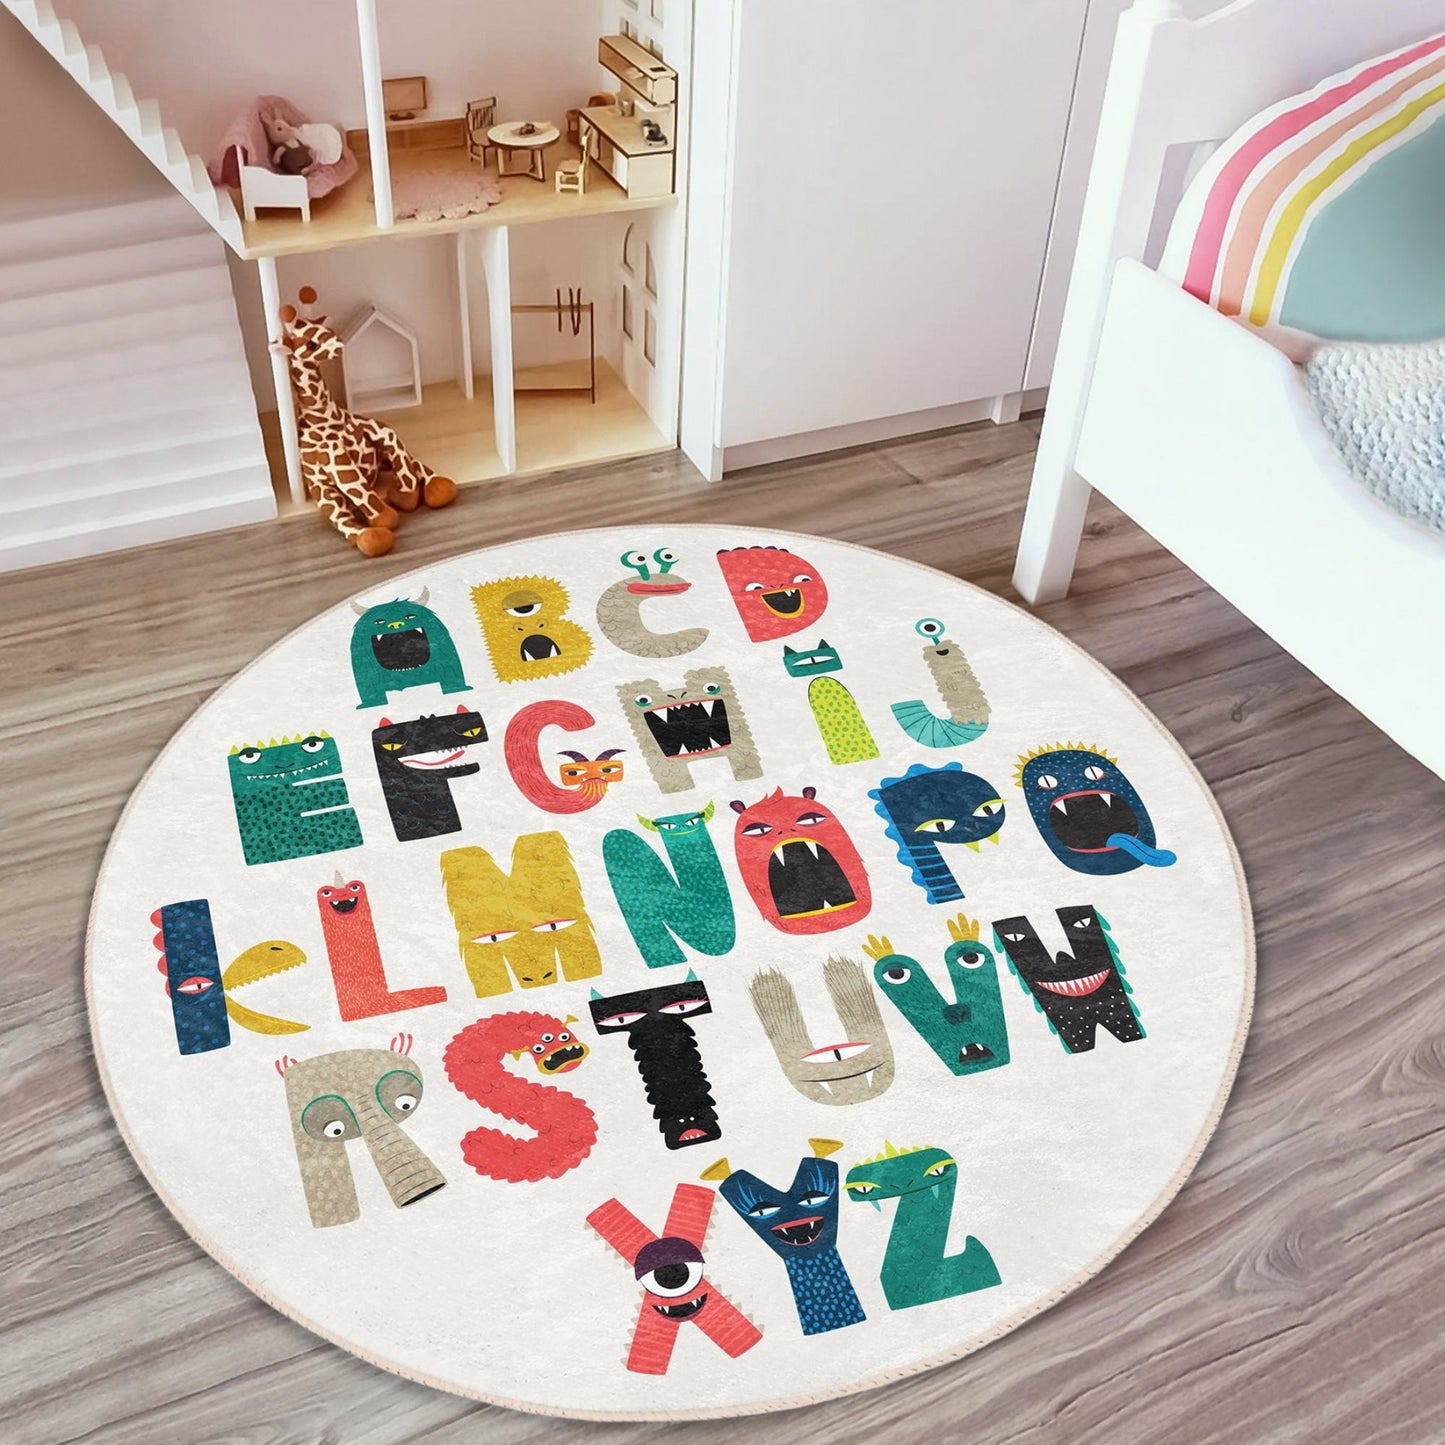 Homeezone's Alphabet Patterned Kids' Room Washable Rug